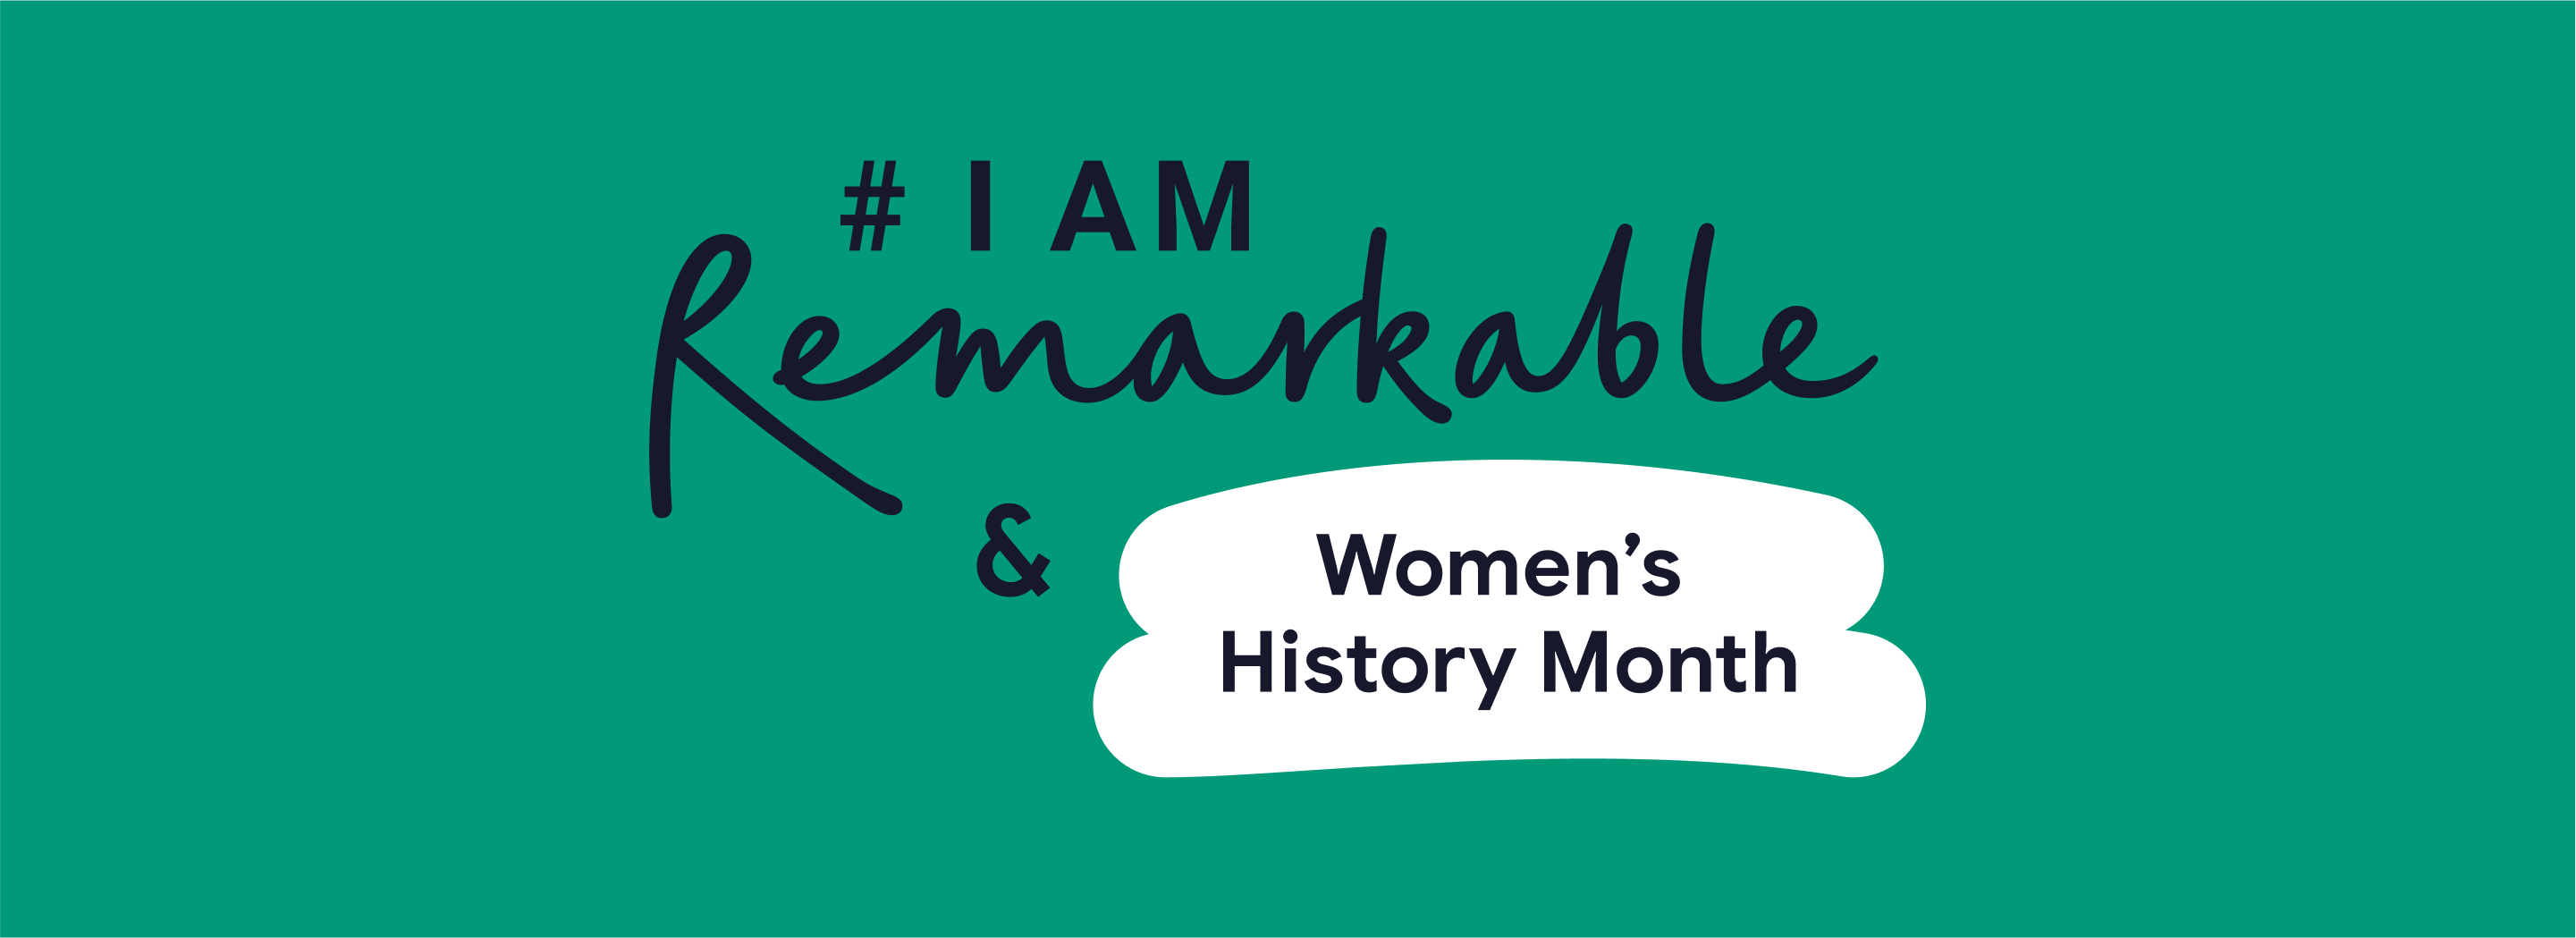 #IAmRemarkable Women's History Month poster